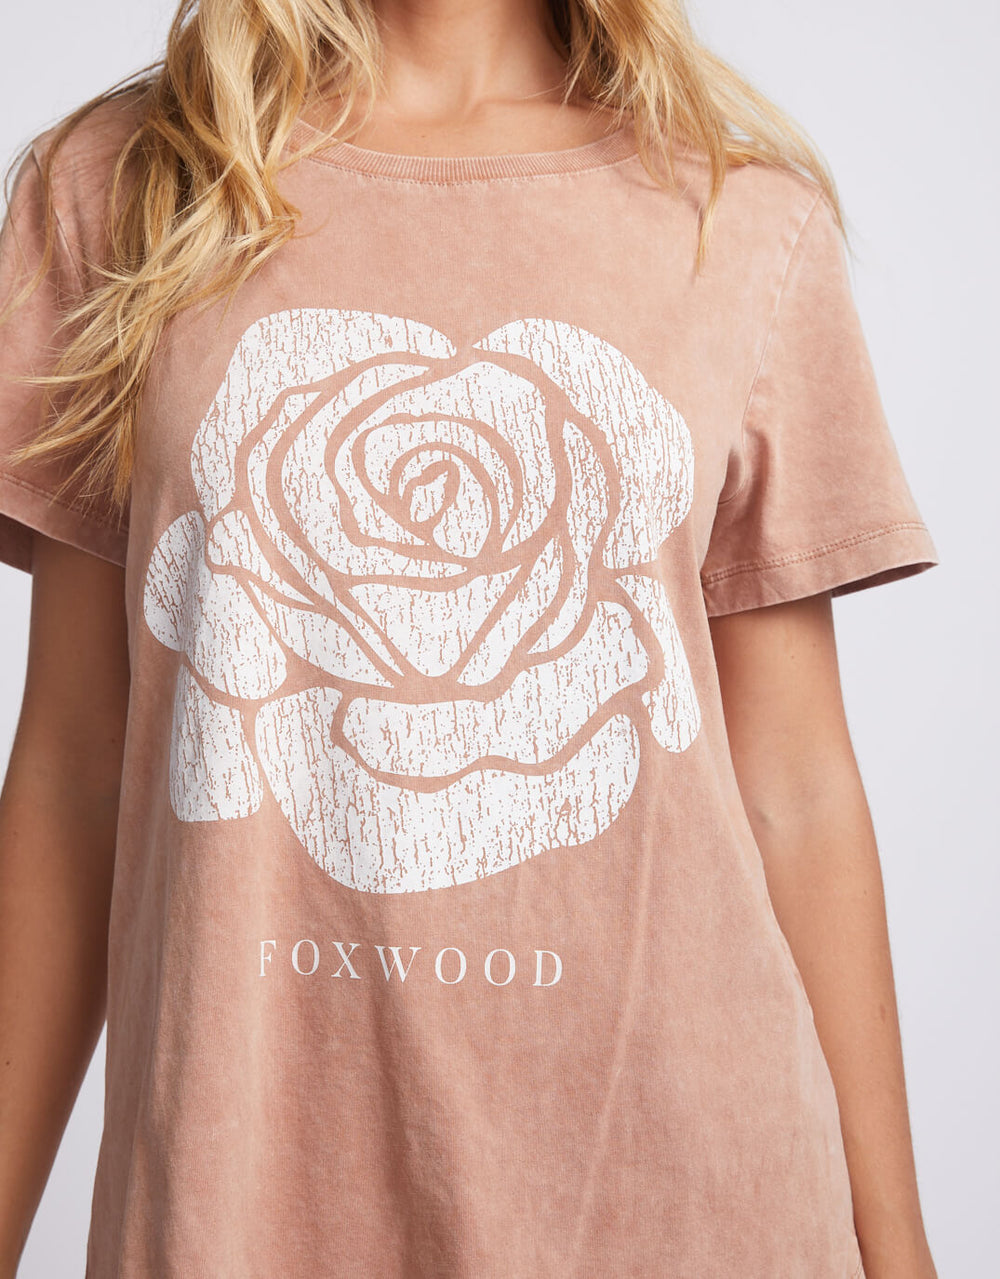 foxwood-rose-tee-bronze-womens-clothing